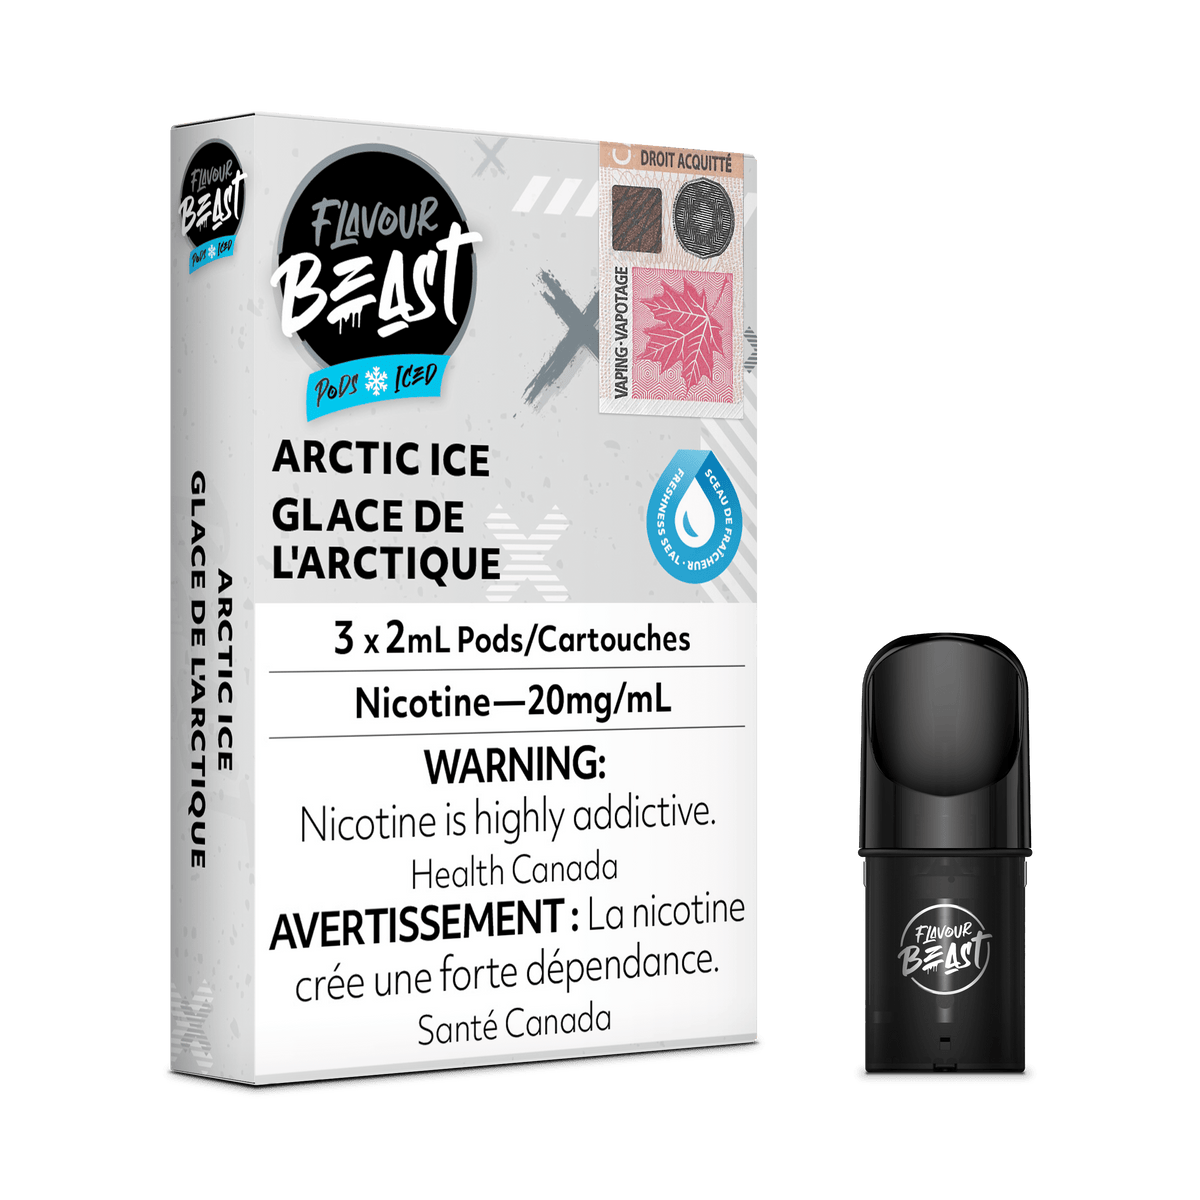 Flavour Beast - Arctic Iced Vape Pod available on Canada online vape shop